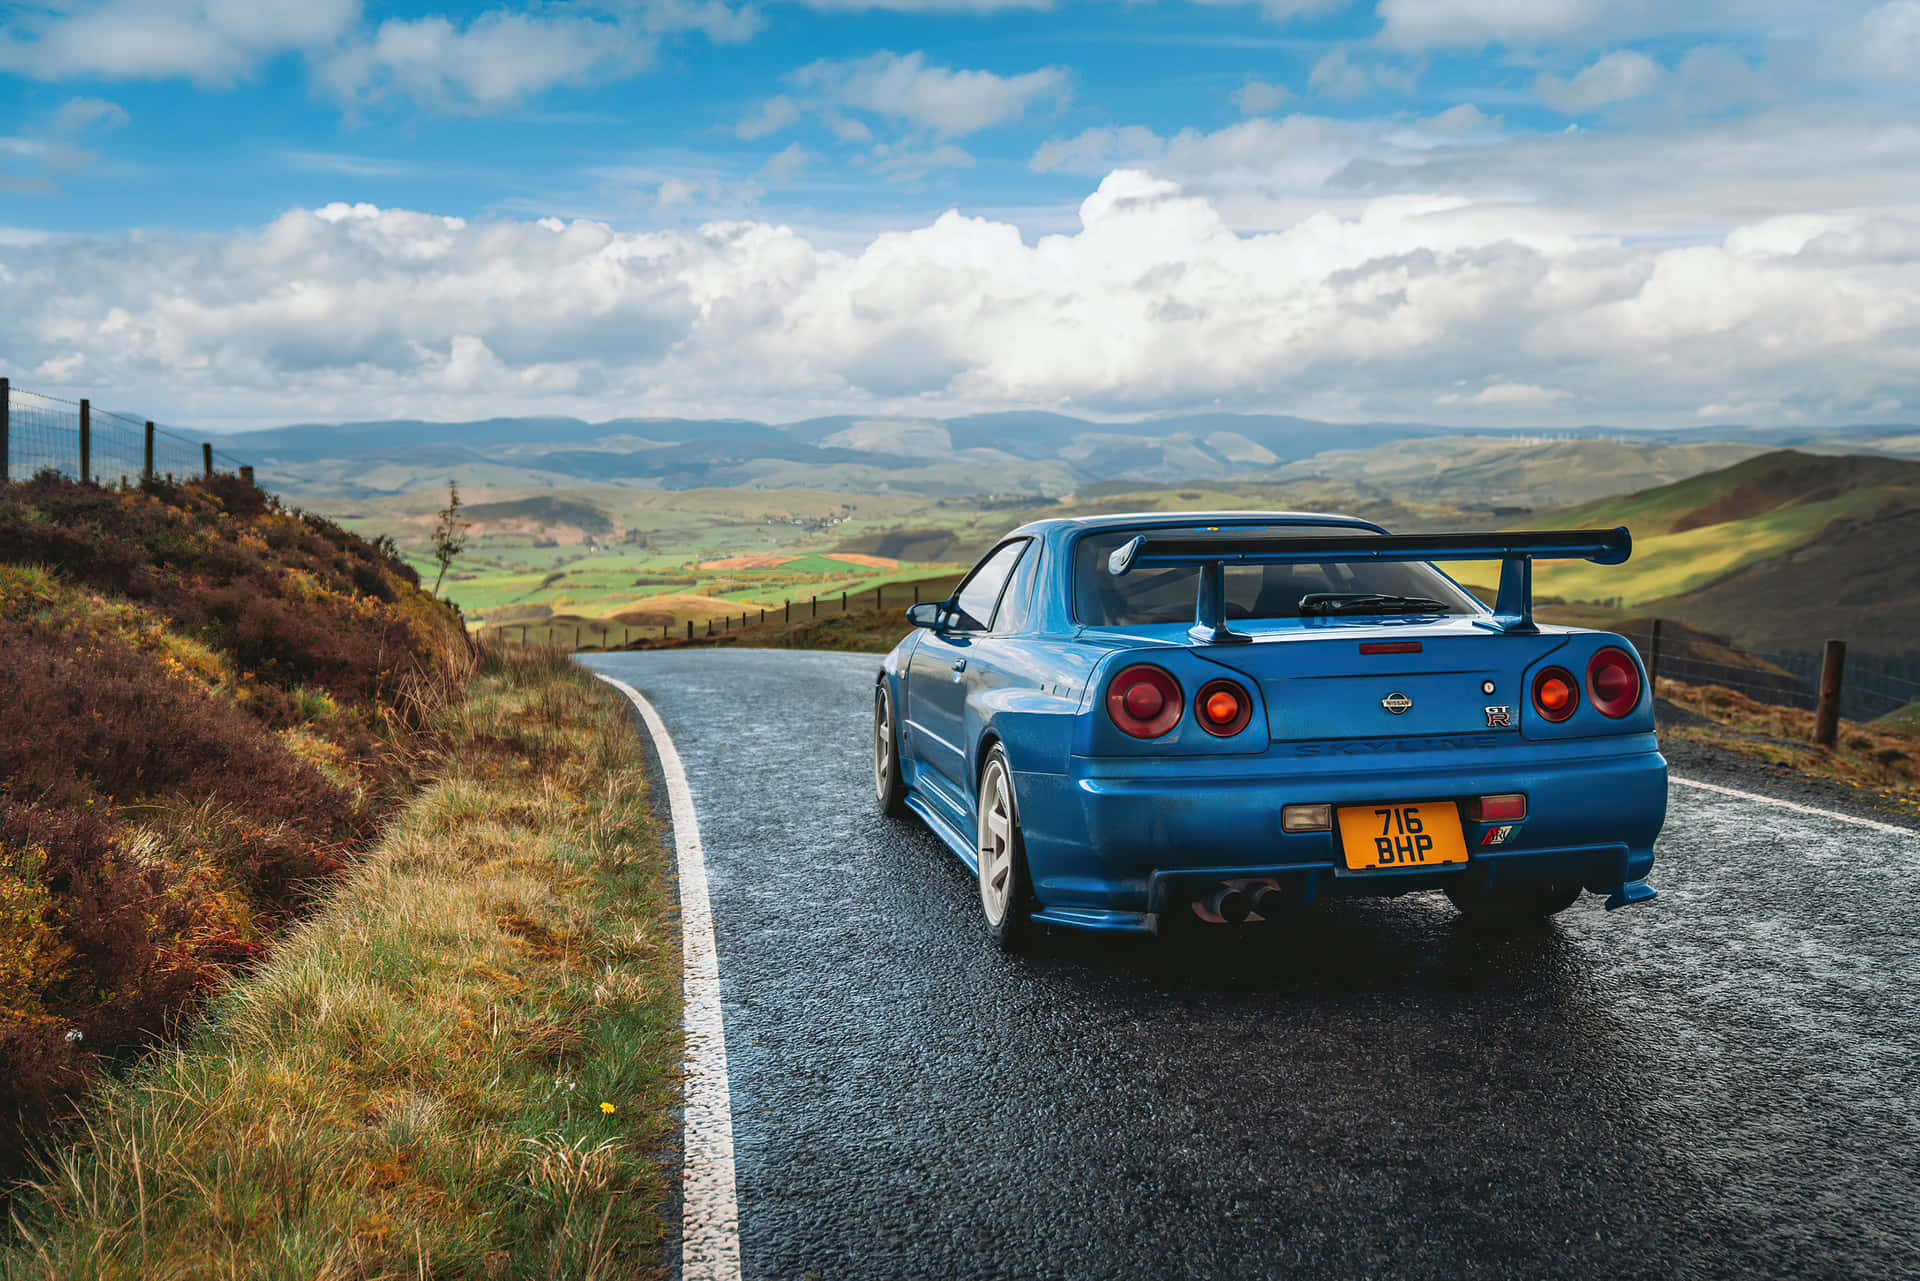 Nissan Skyline [wallpaper]